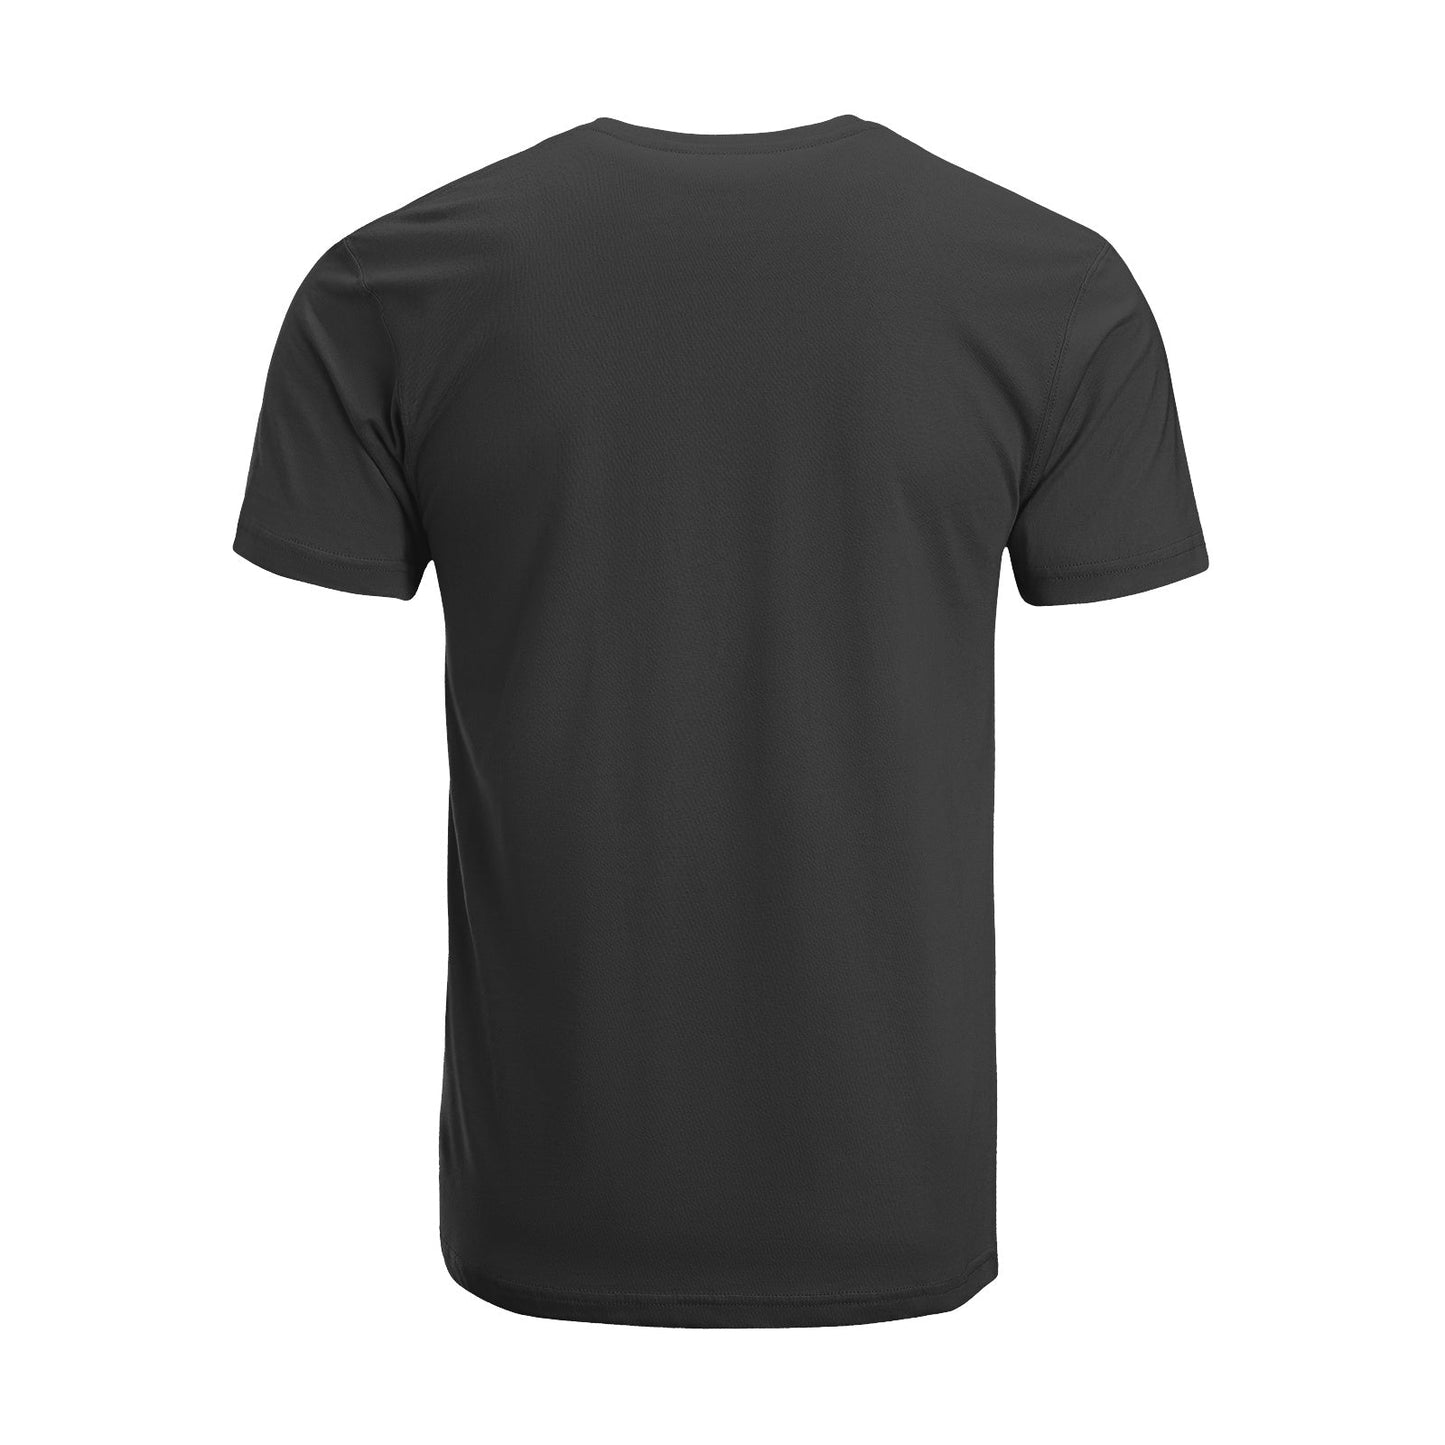 Unisex Short Sleeve Crew Neck Cotton Jersey T-Shirt DOG 45